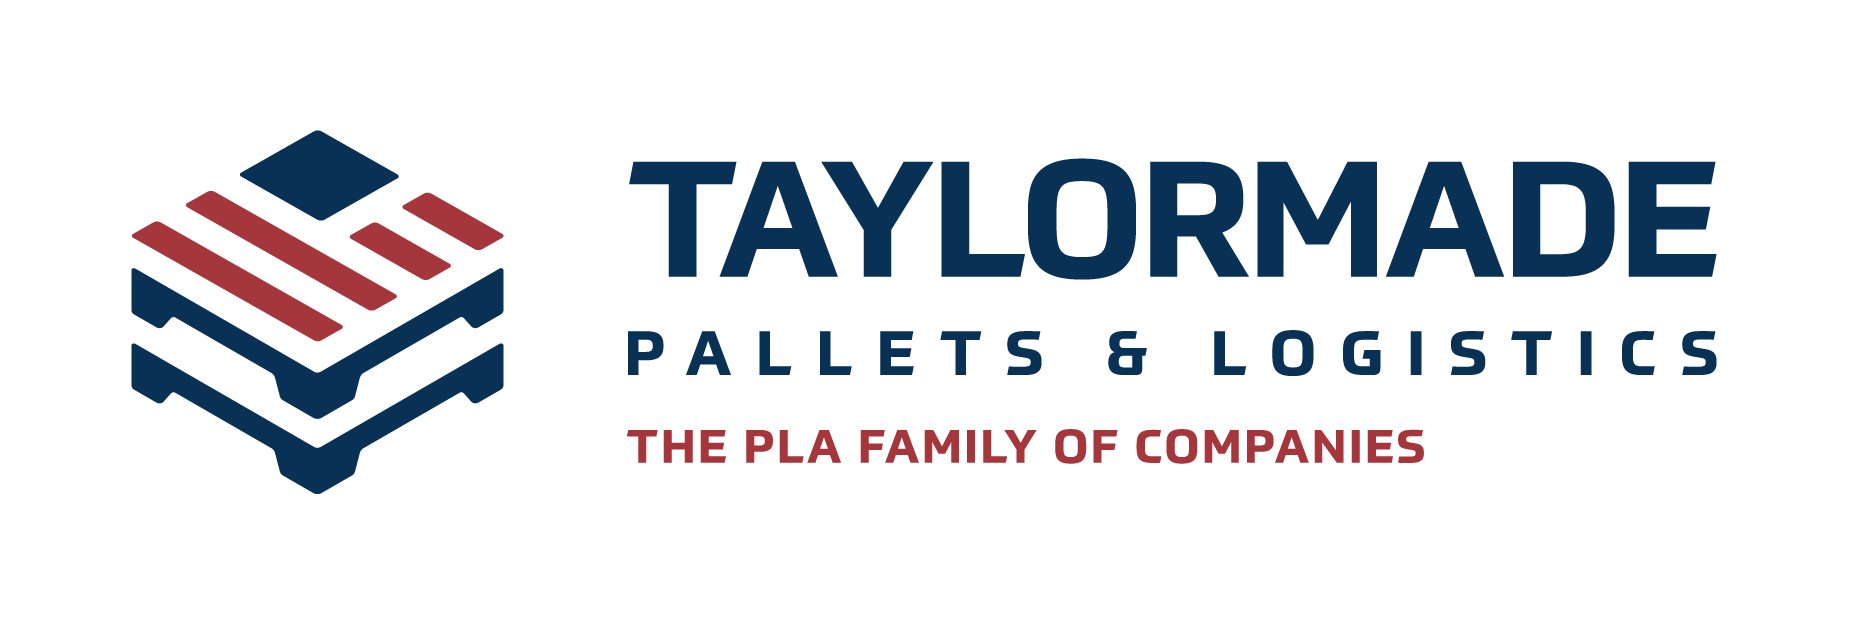 TaylorMade Pallets _ Logistics - Logo-01